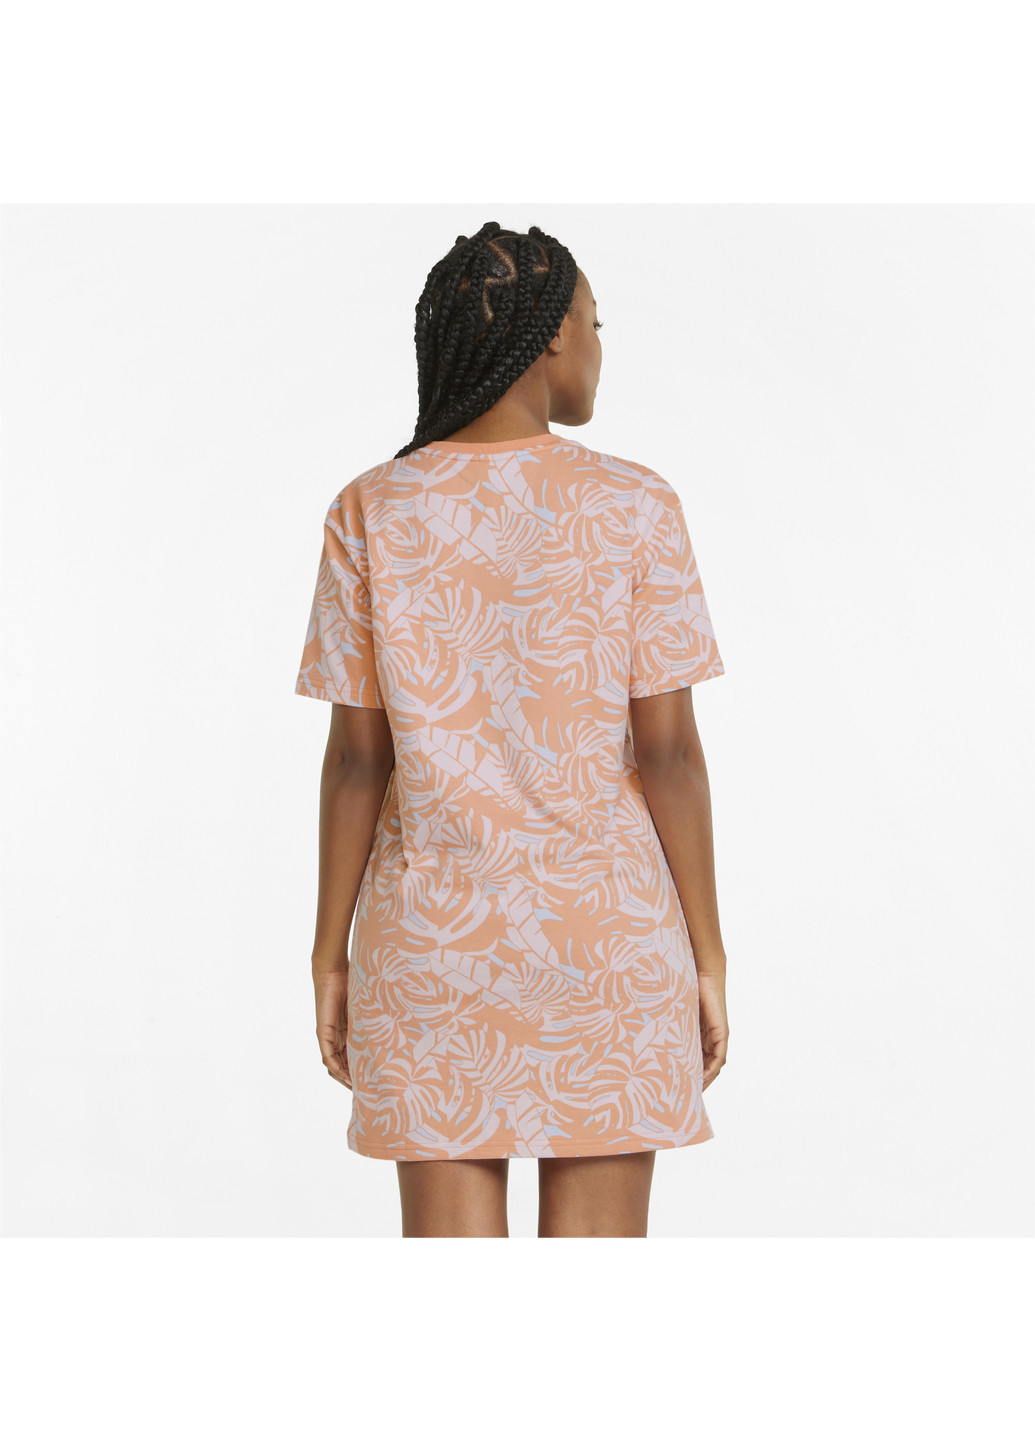 Сукня FLORAL VIBES Printed Women’s Dress Puma однотонна помаранчева спортивна бавовна, поліестер, еластан